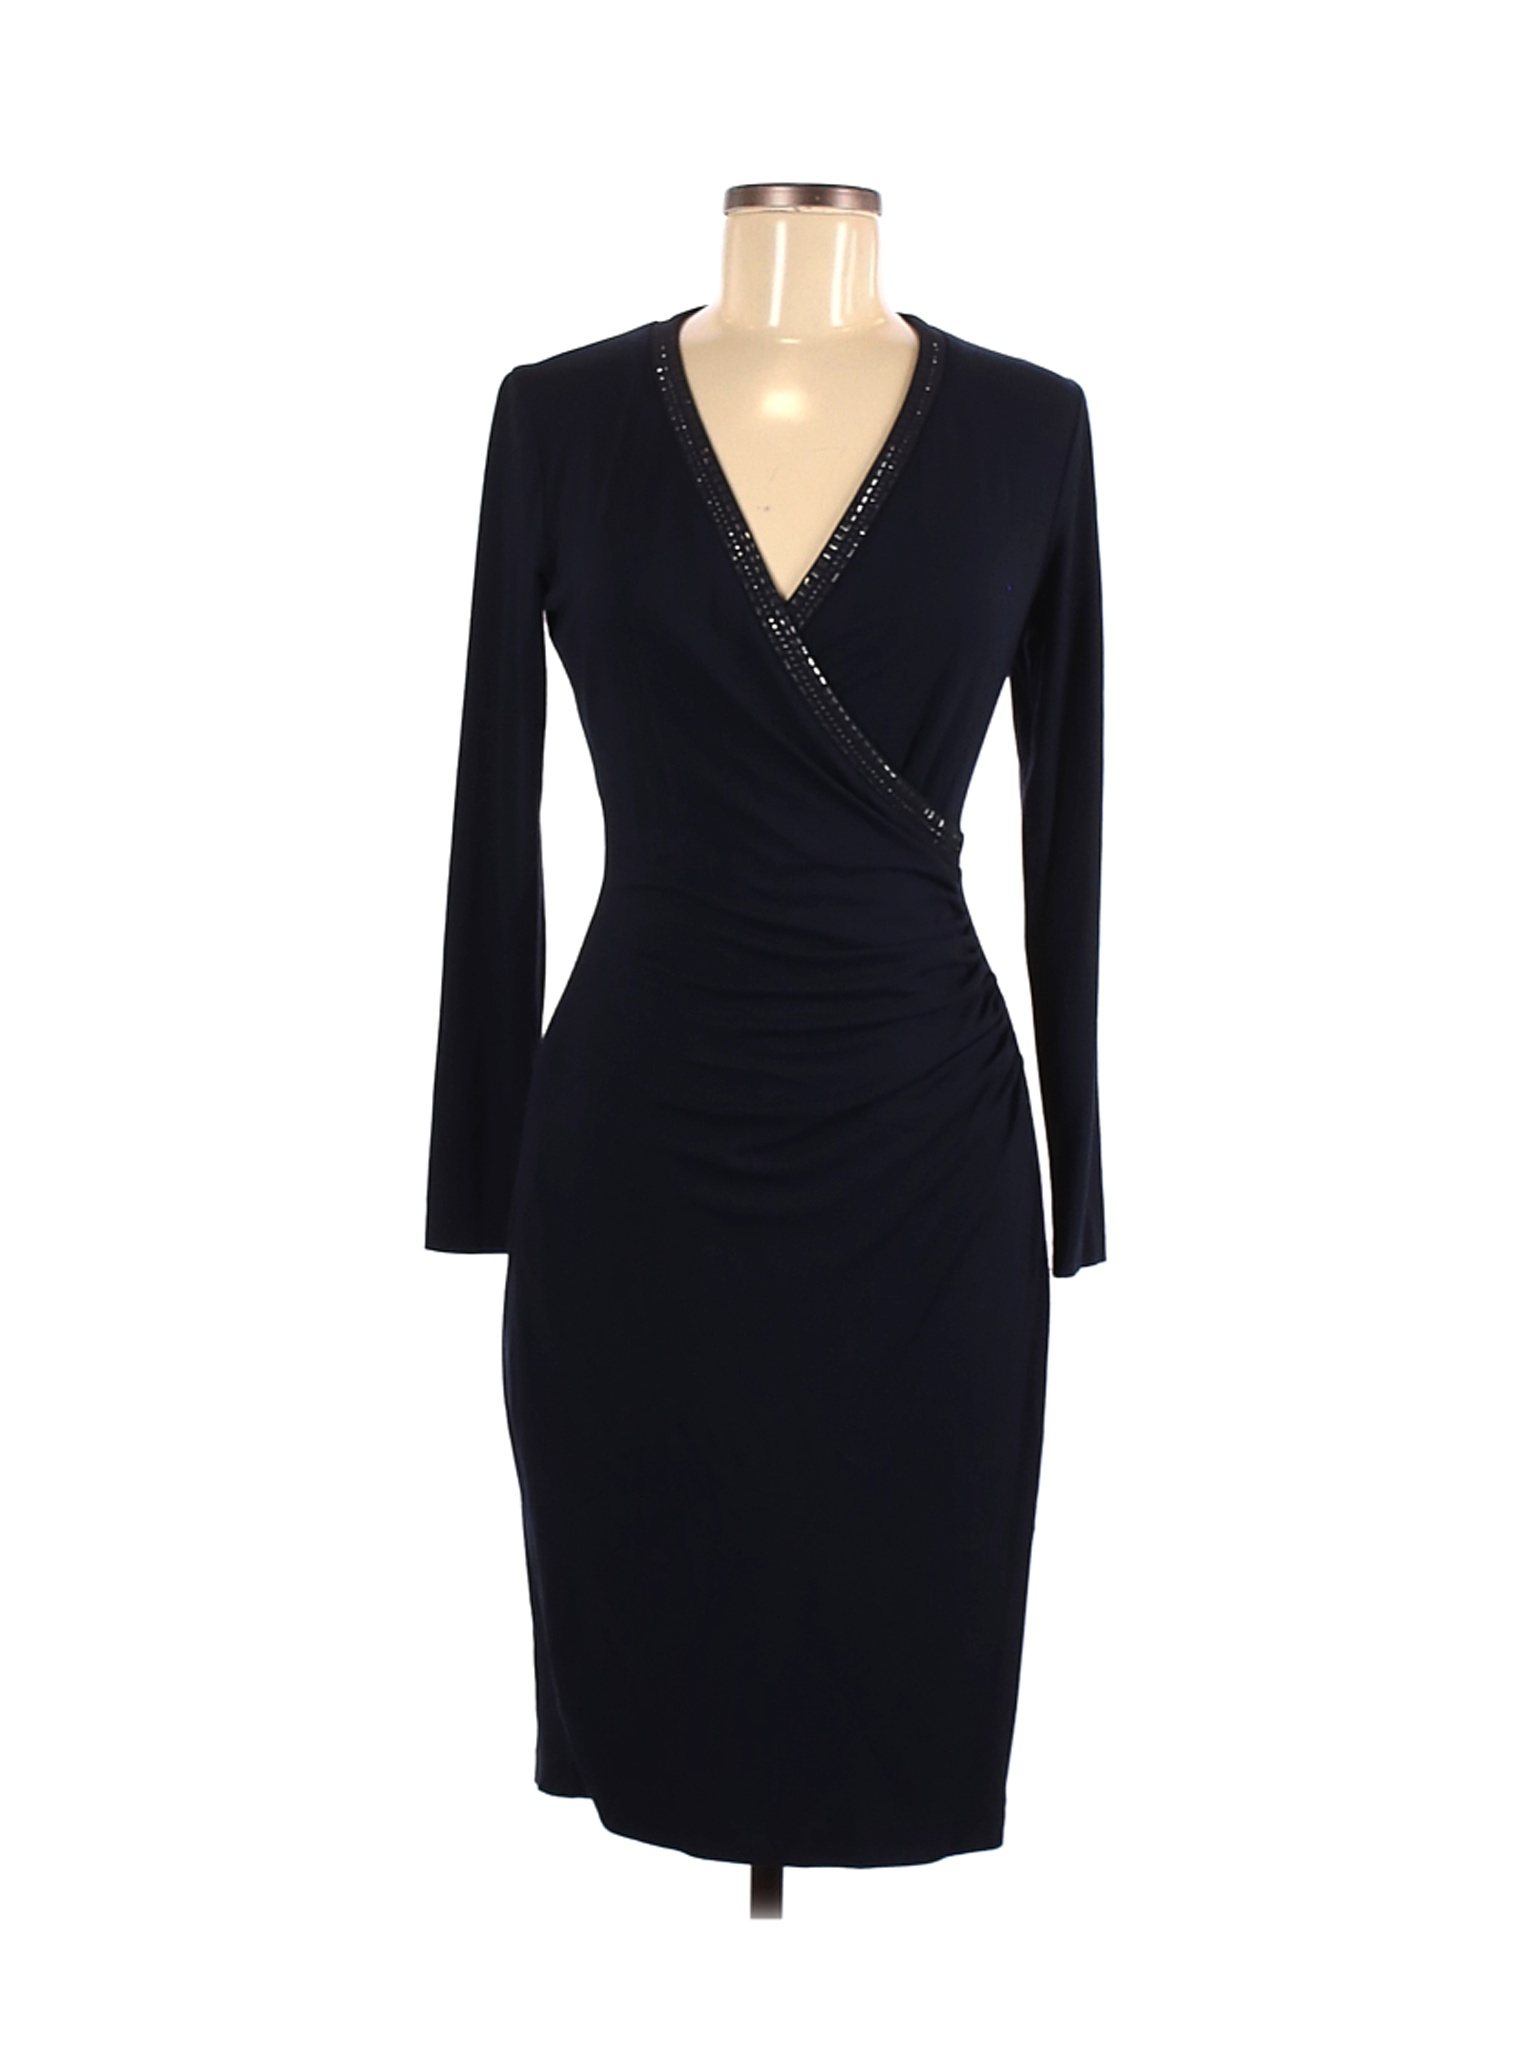 Cache Women Black Cocktail Dress M | eBay